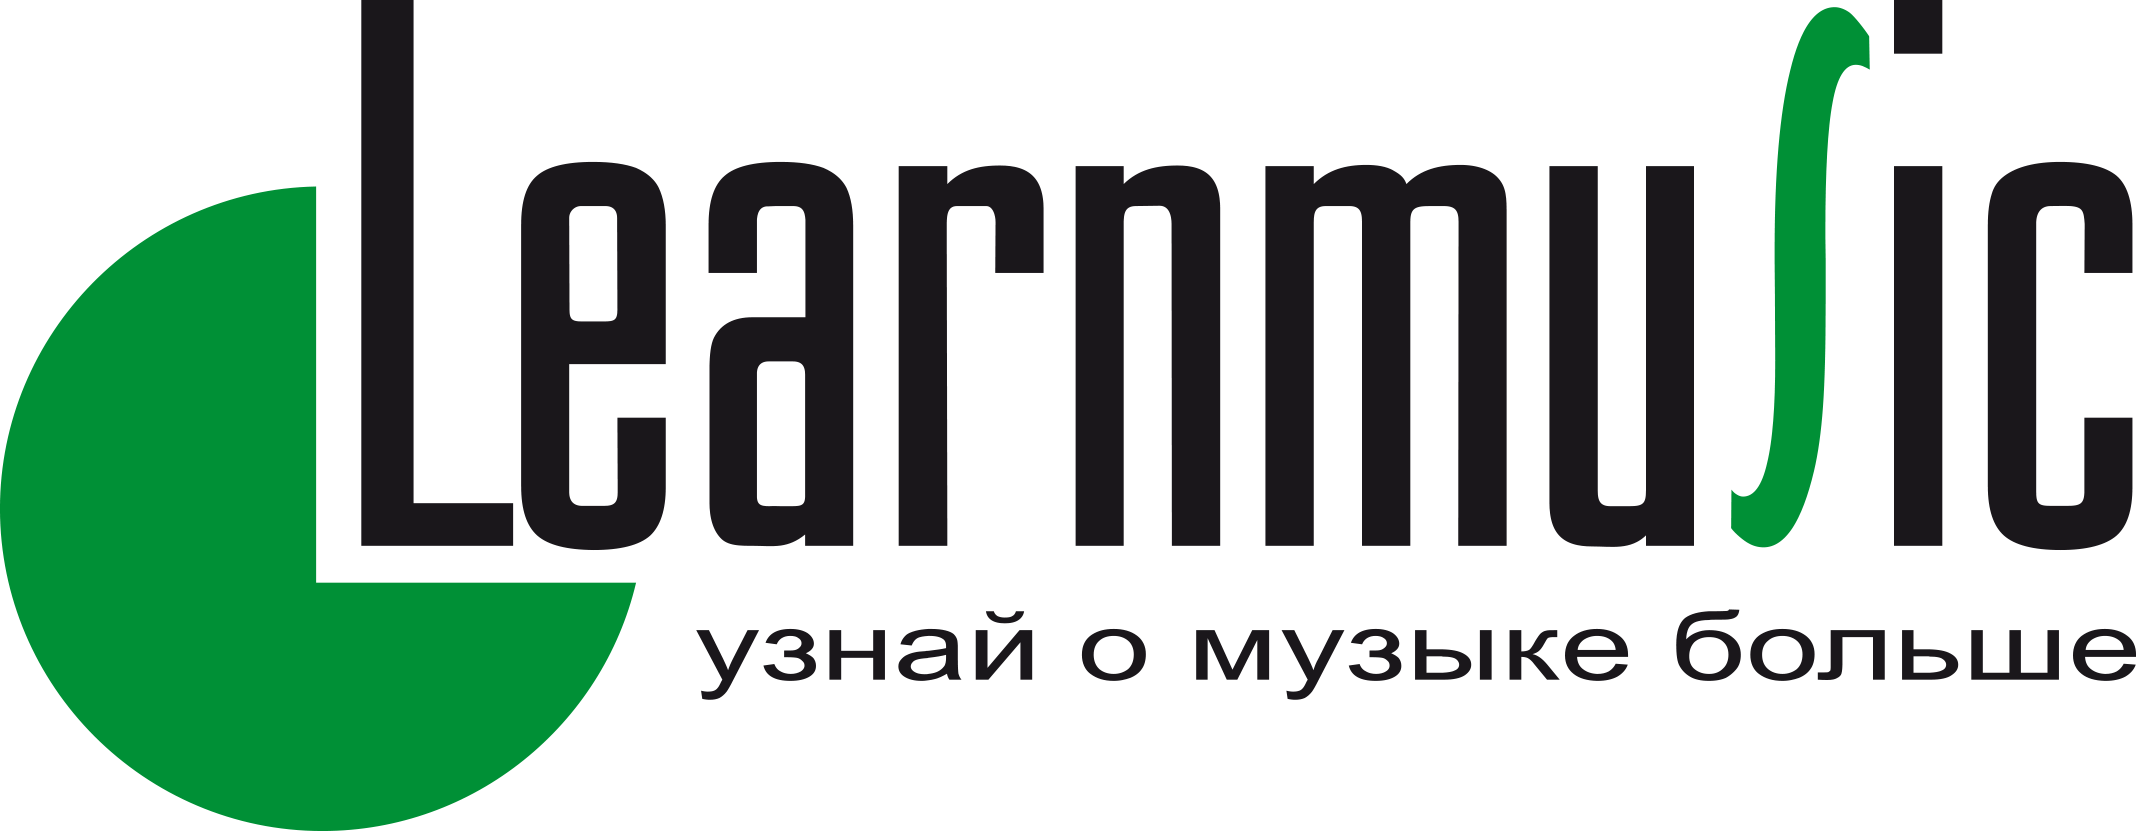 Learnmusic.ru